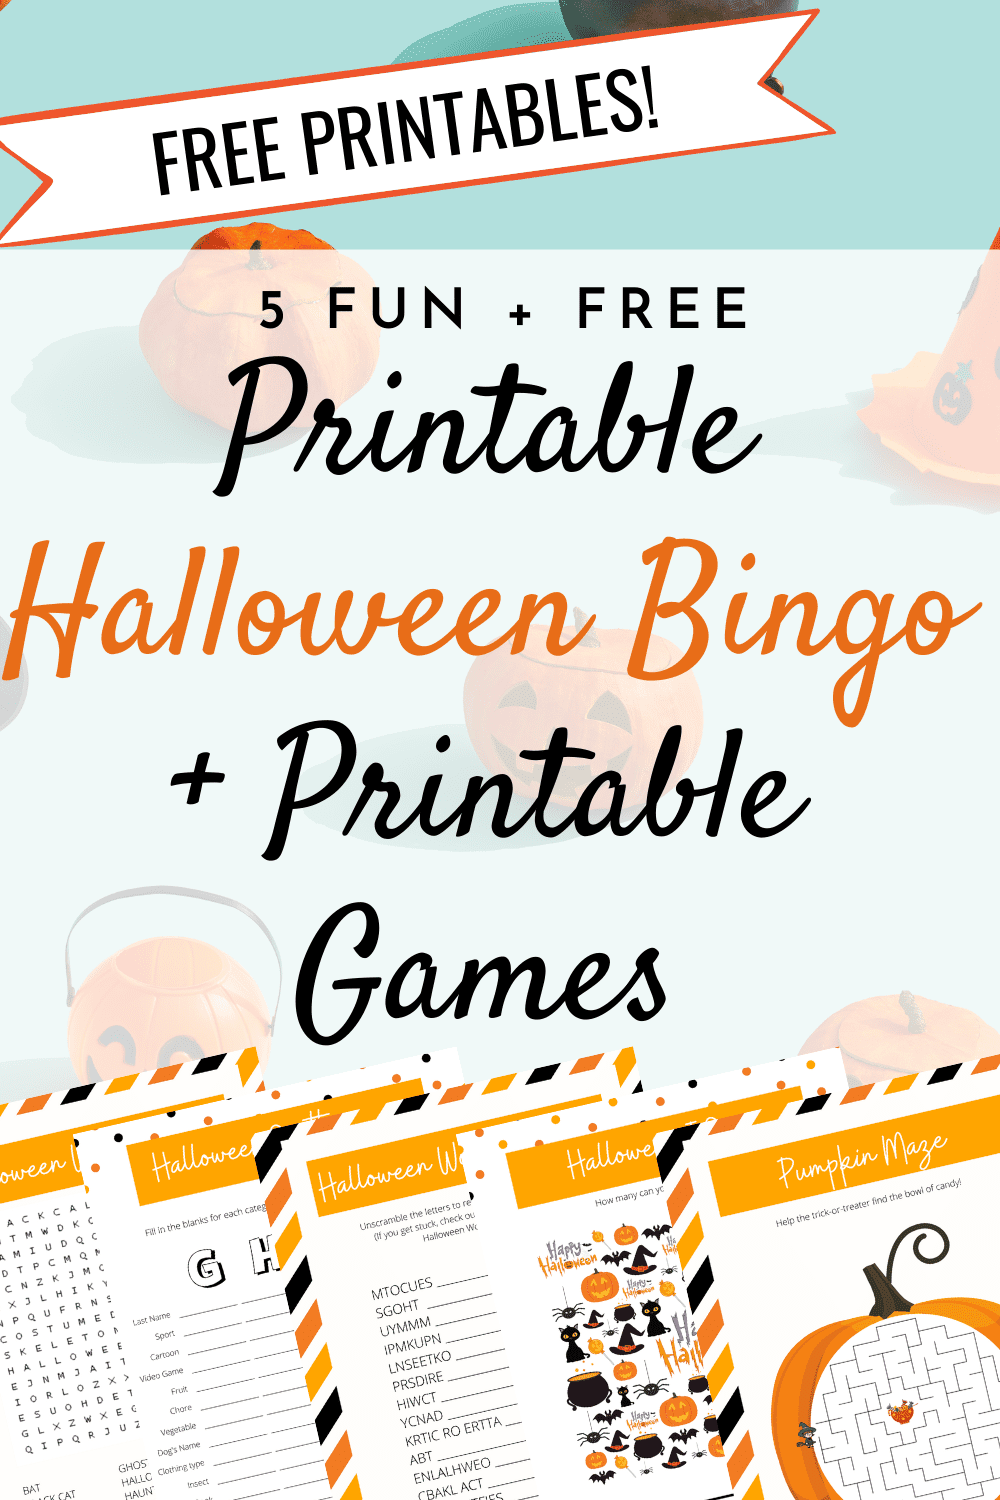 Halloween Bingo Free Printable (+ 5 More Adorable Halloween Games!)